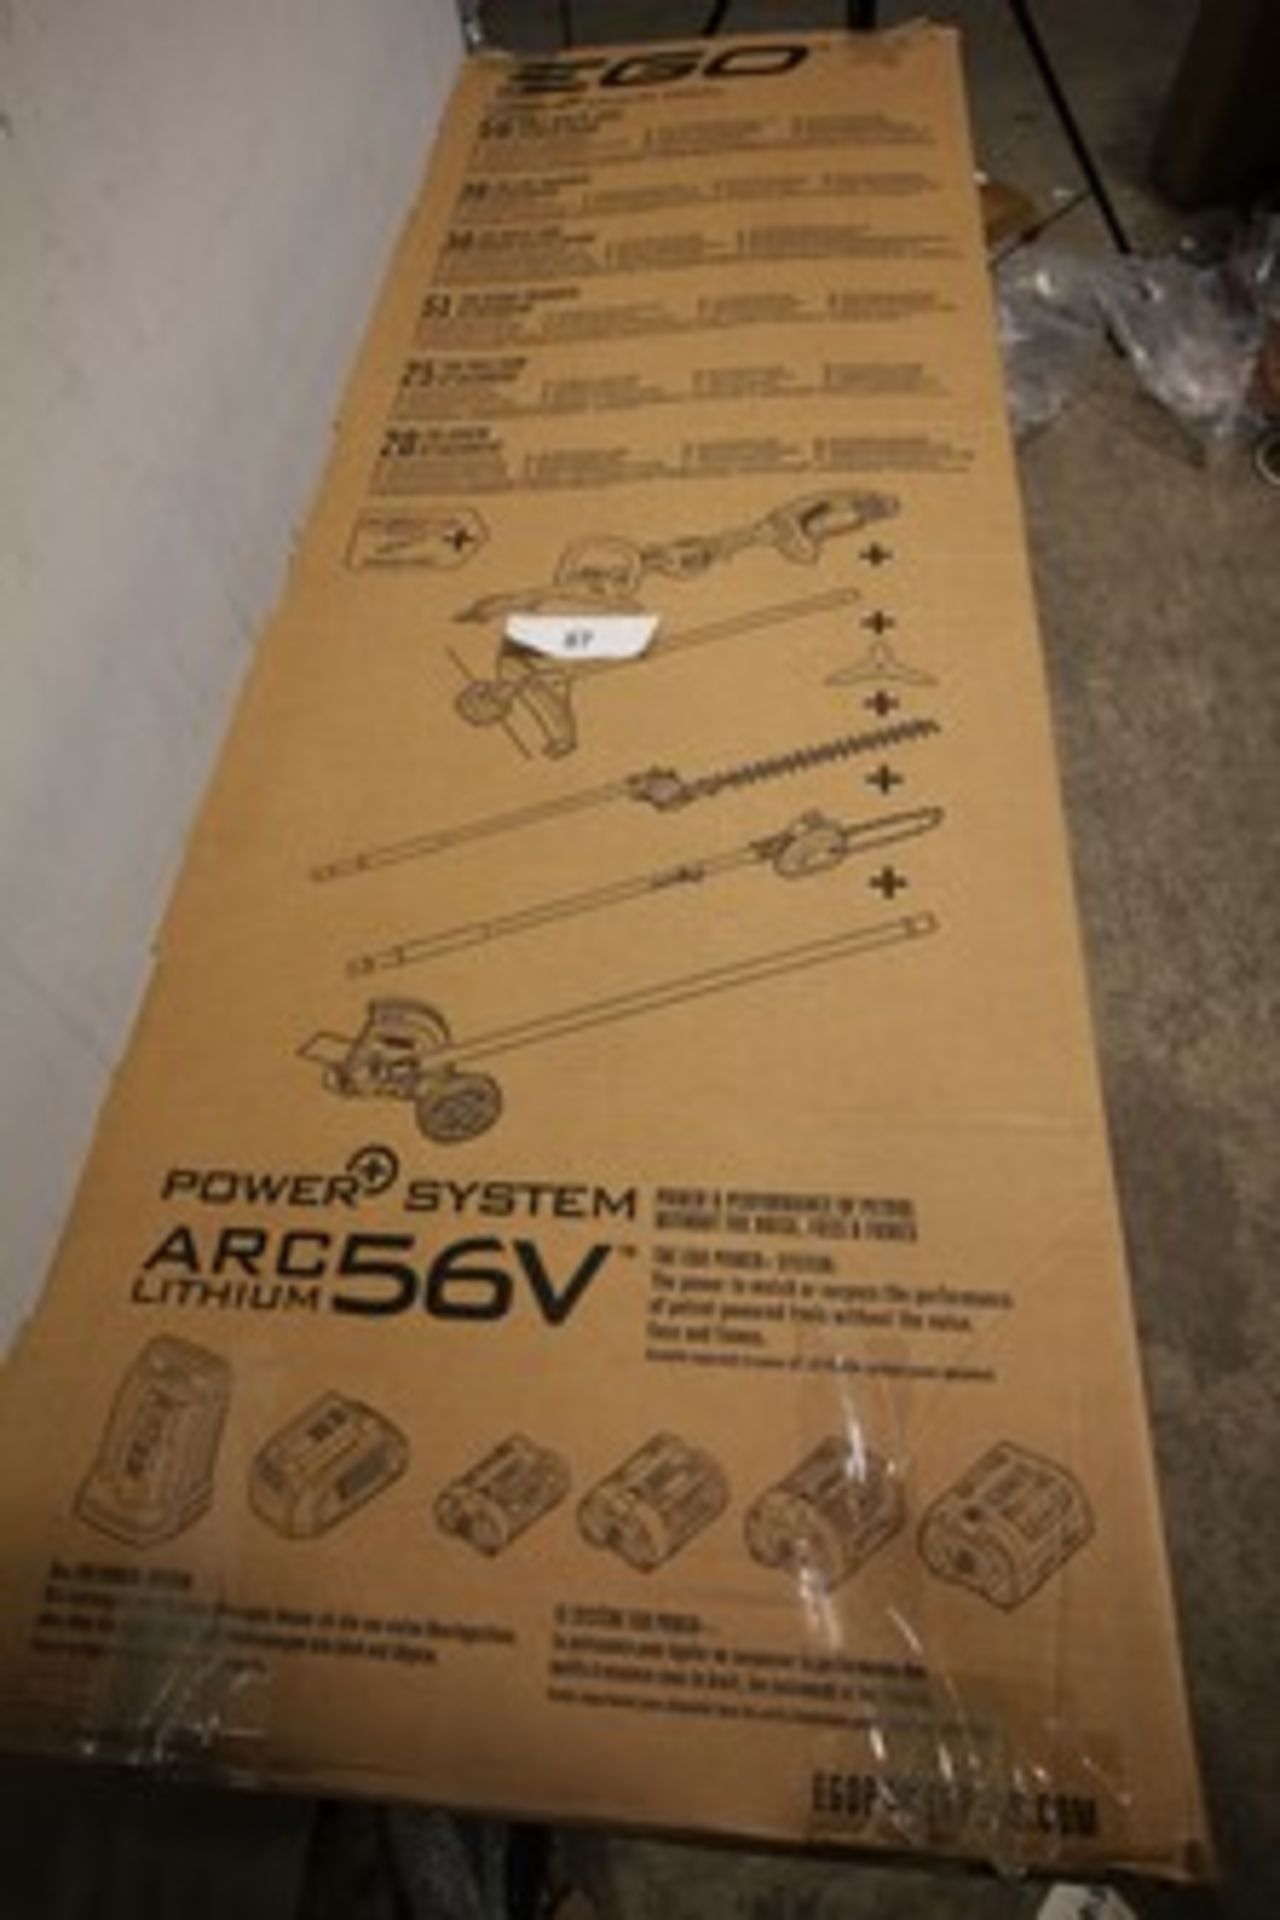 1 x Ego Power 56V multi power tool, model MHSC2002E (BS) - sealed new in box (ES8) - Image 4 of 4